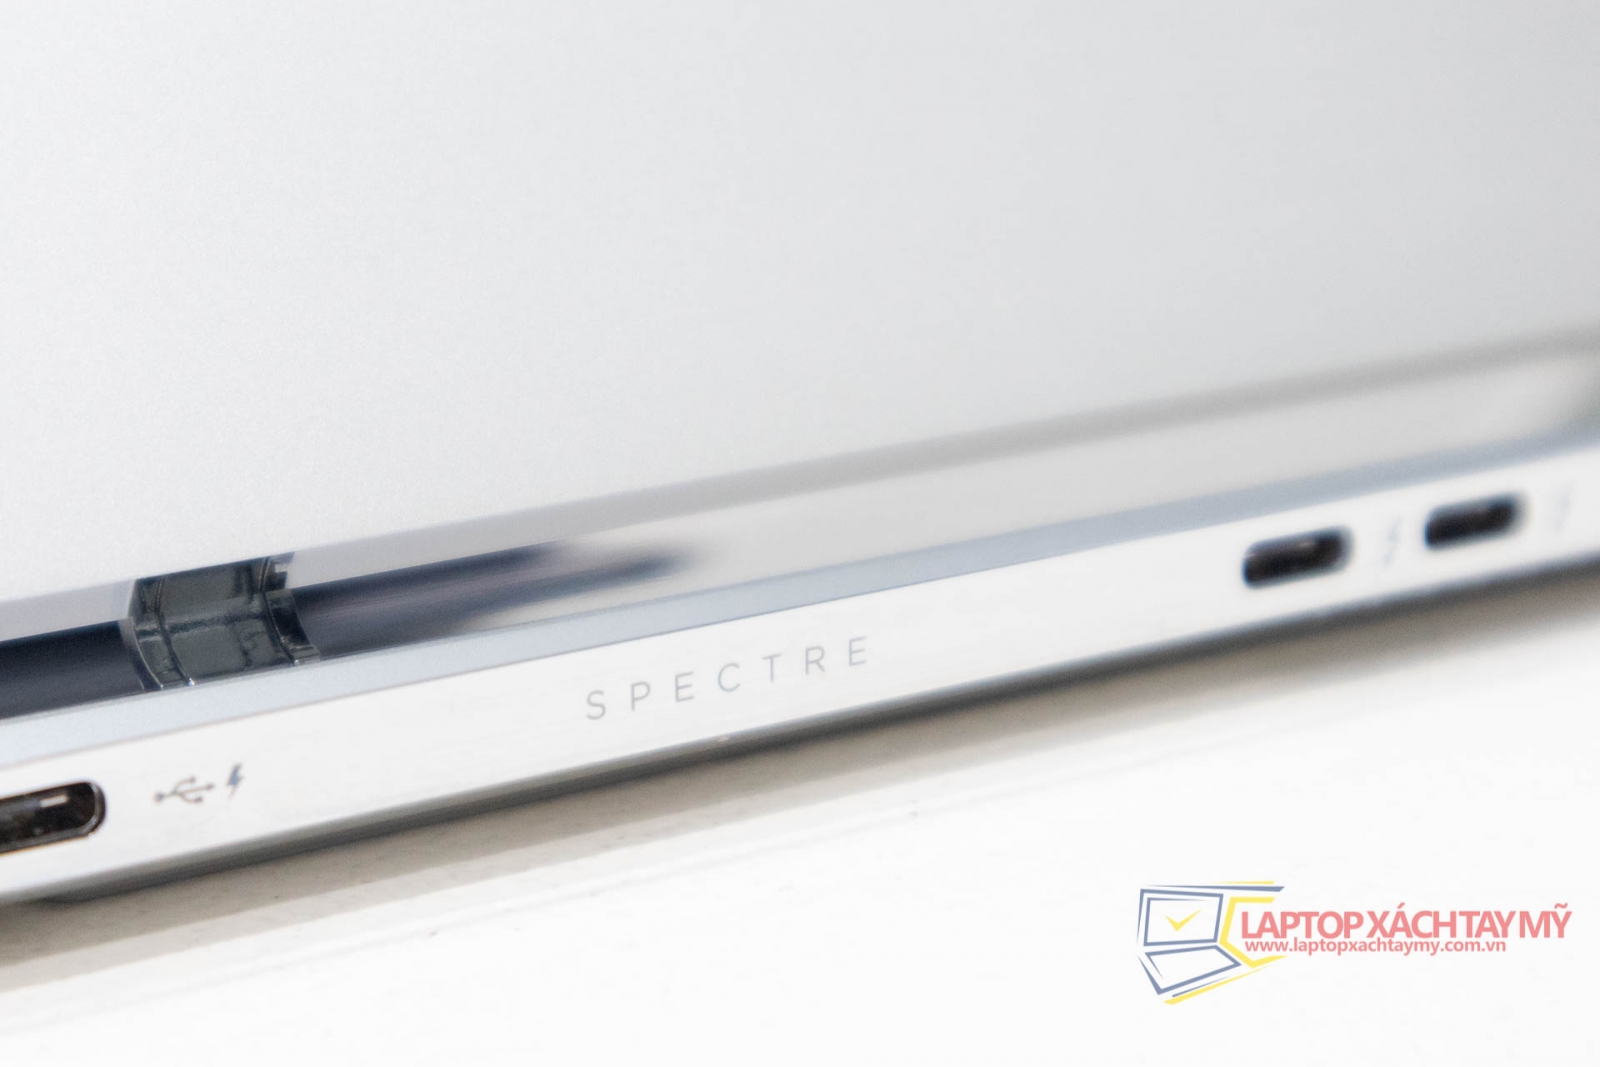 HP SPECTRE Notebook 13 i7 7500U, 8Gb Ram, 256Gb SSD, Màn hình Full HD